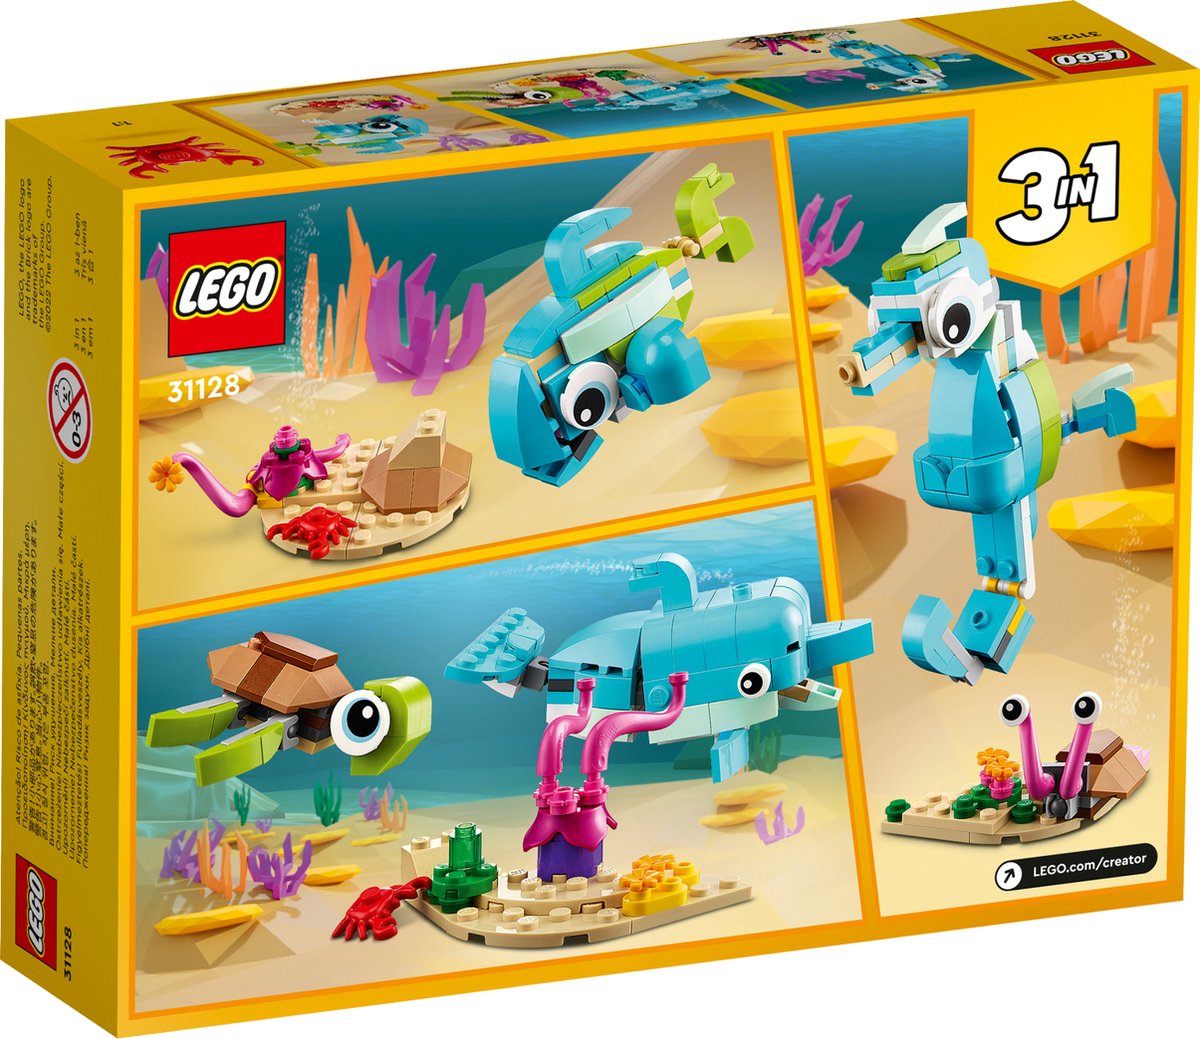 LEGO® Creator 3-en-1 31140 La licorne magique - Lego - Achat & prix